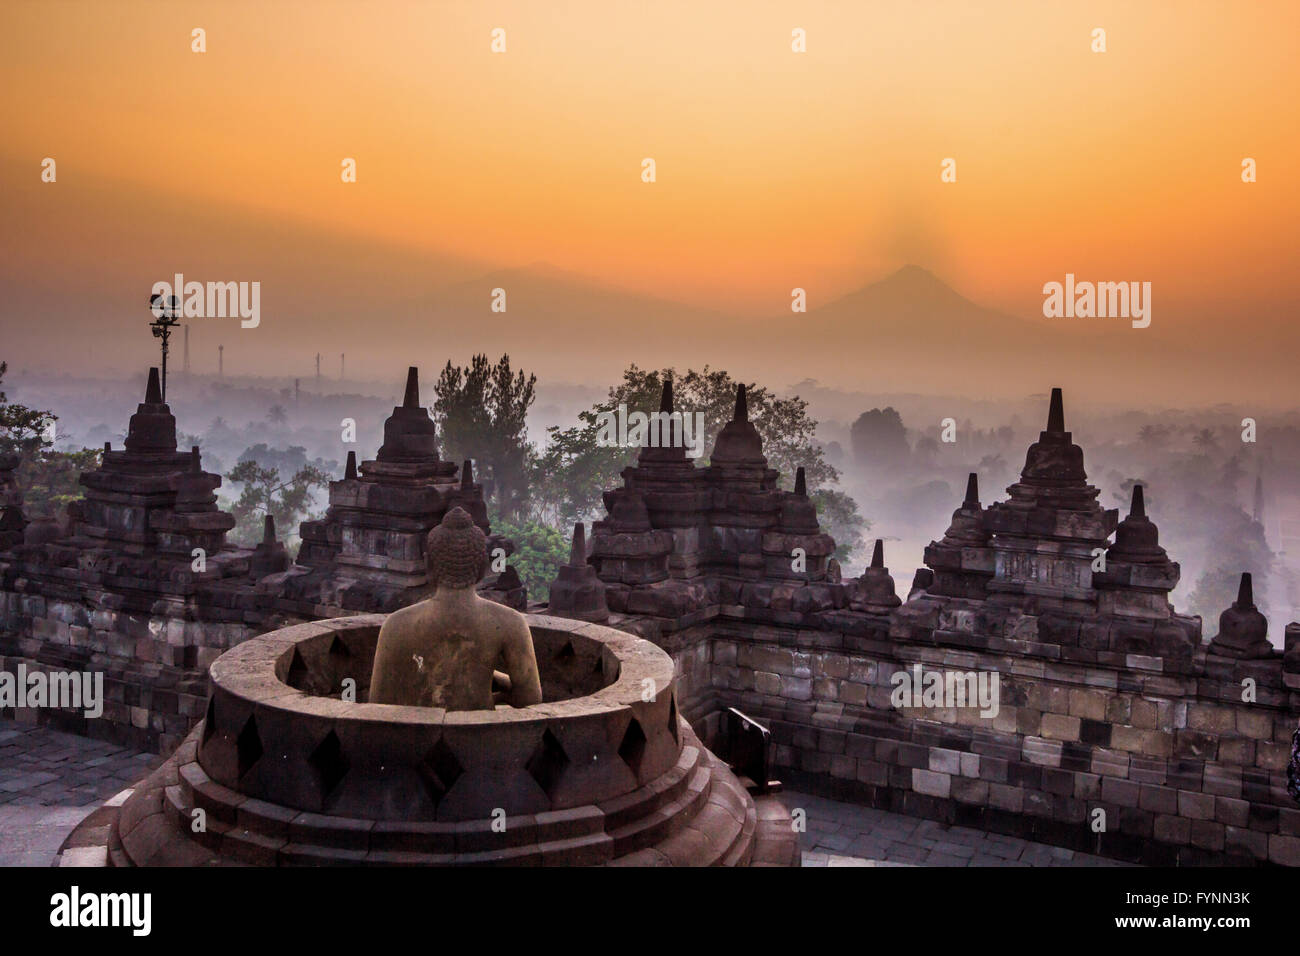 Borobudur Temple at twilight time, Yogyakarta, Java, Indonesia. Stock Photo